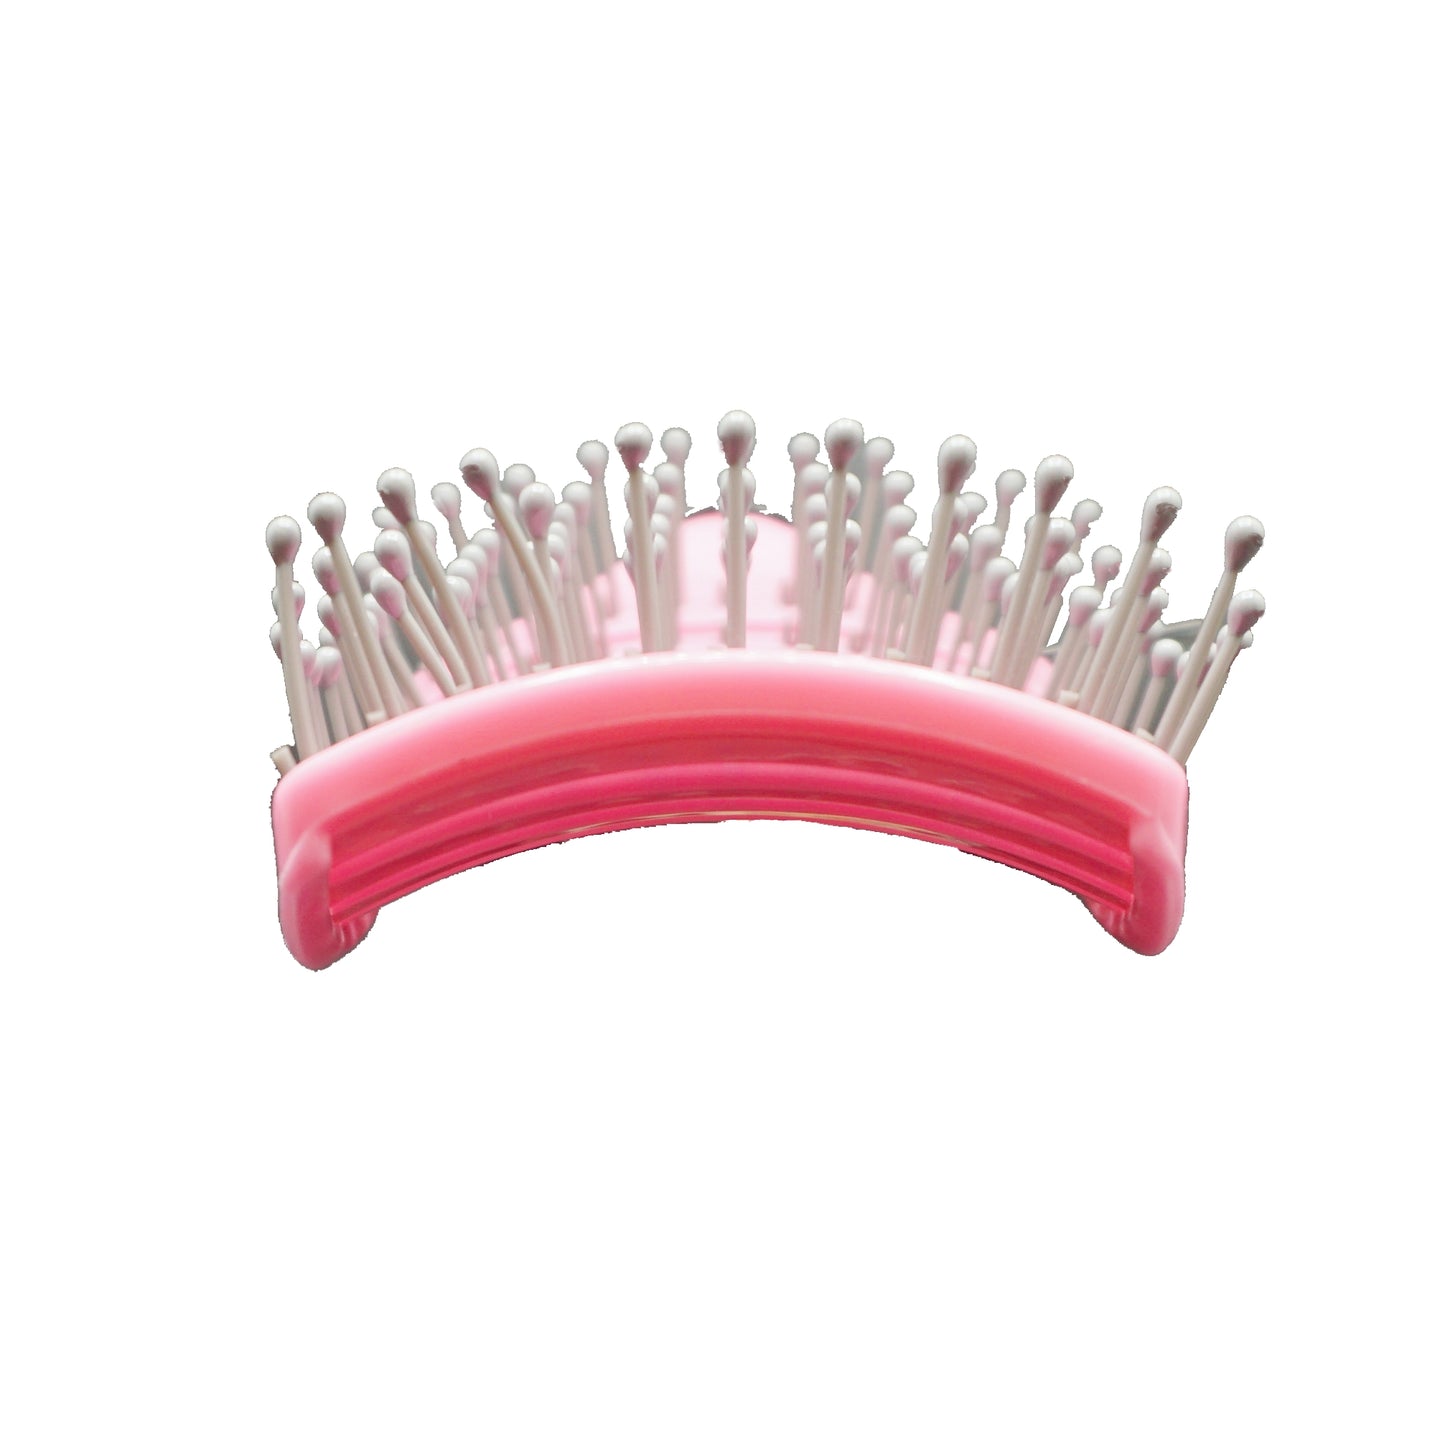 9.5in Vented Brush - Nylon Bristles, Pink